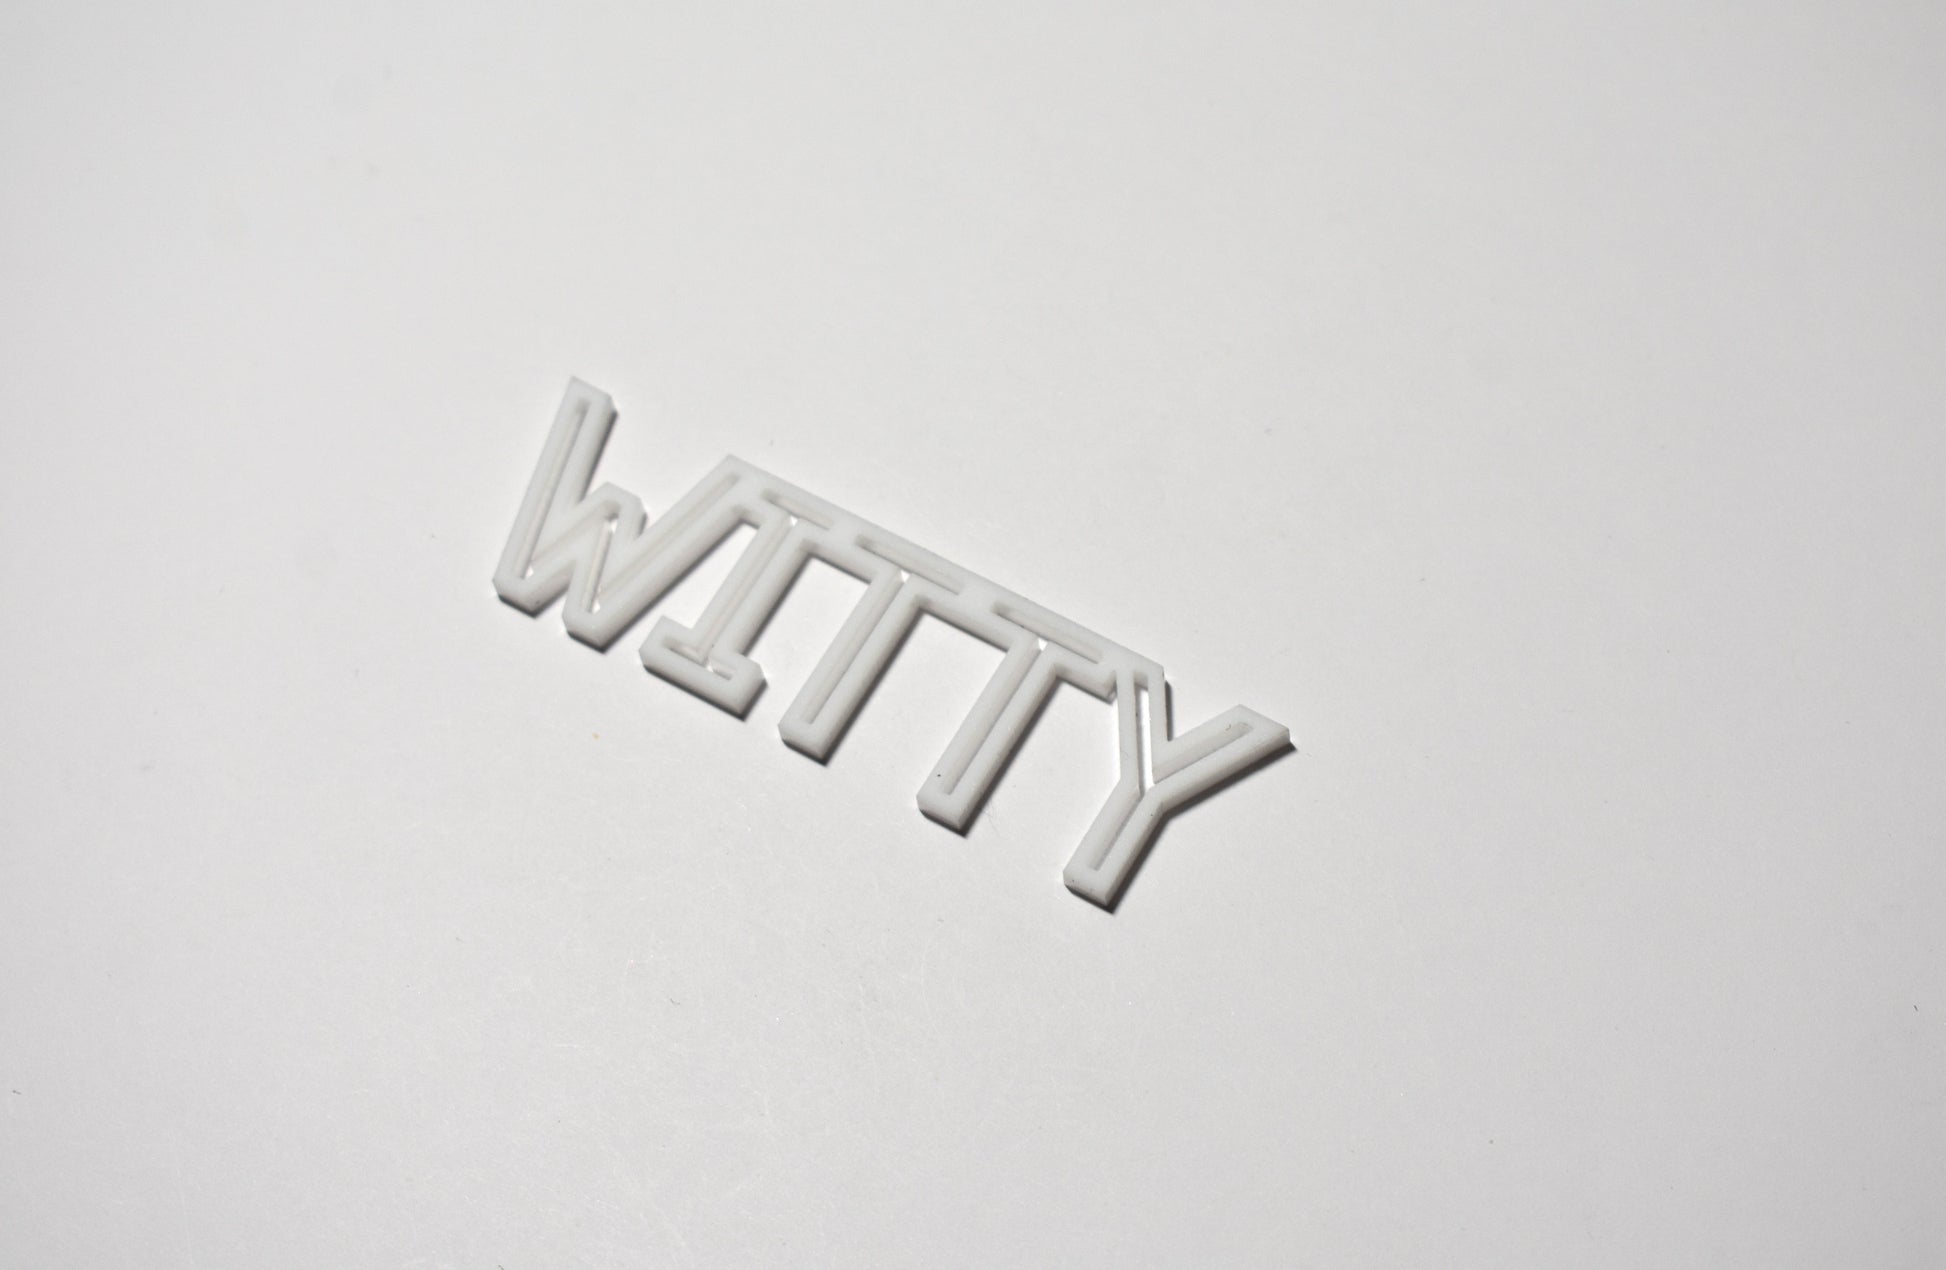 Witty - Creative Designs By Kari